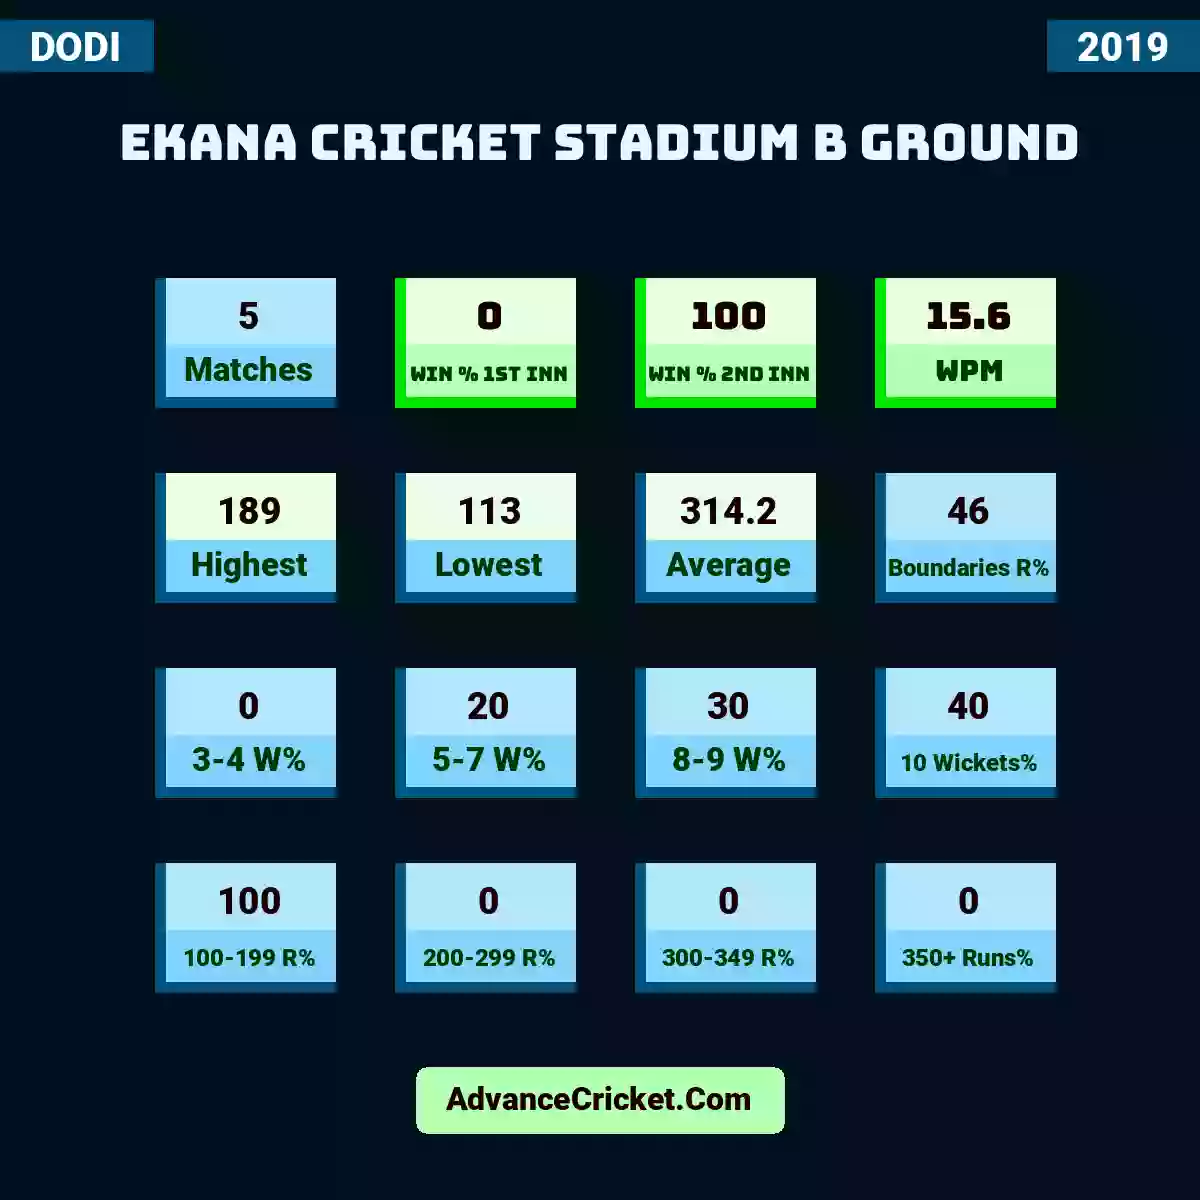 Image showing Ekana Cricket Stadium B ground with Matches: 5, Win % 1st Inn: 0, Win % 2nd Inn: 100, WPM: 15.6, Highest: 189, Lowest: 113, Average: 314.2, Boundaries R%: 46, 3-4 W%: 0, 5-7 W%: 20, 8-9 W%: 30, 10 Wickets%: 40, 100-199 R%: 100, 200-299 R%: 0, 300-349 R%: 0, 350+ Runs%: 0.